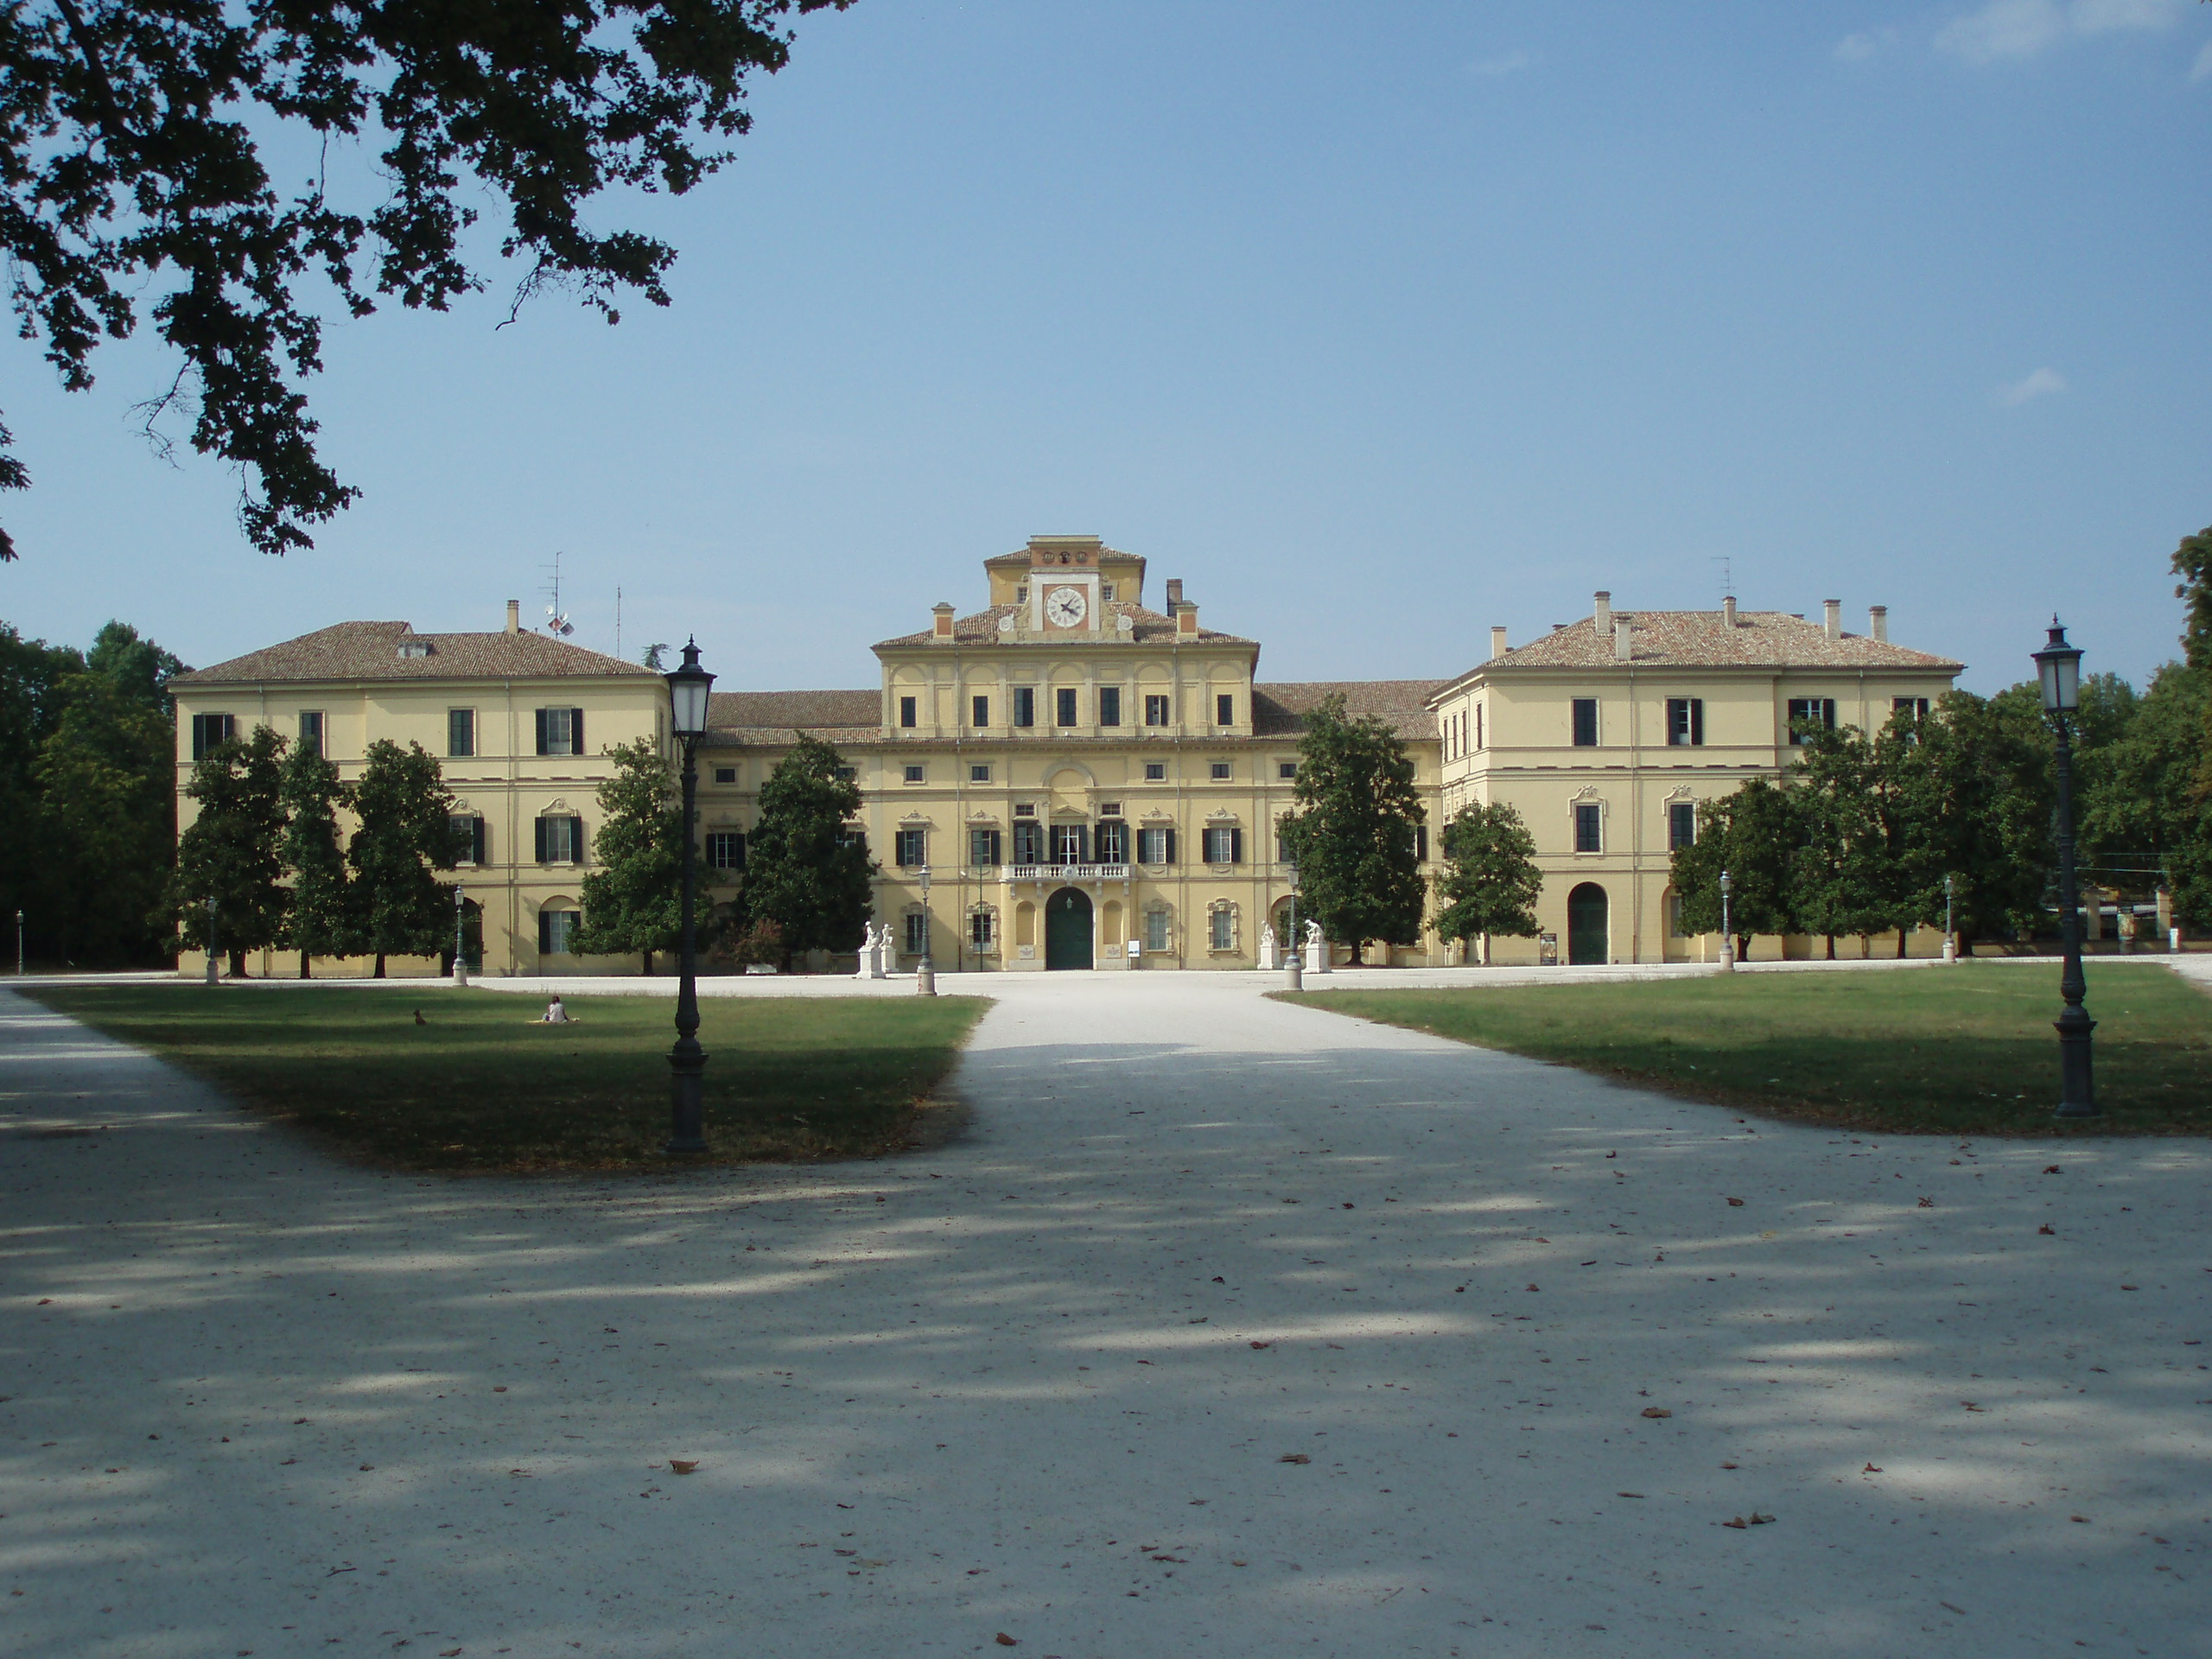 photo: https://upload.wikimedia.org/wikipedia/commons/3/32/Palazzo_Ducale_di_Parma.JPG